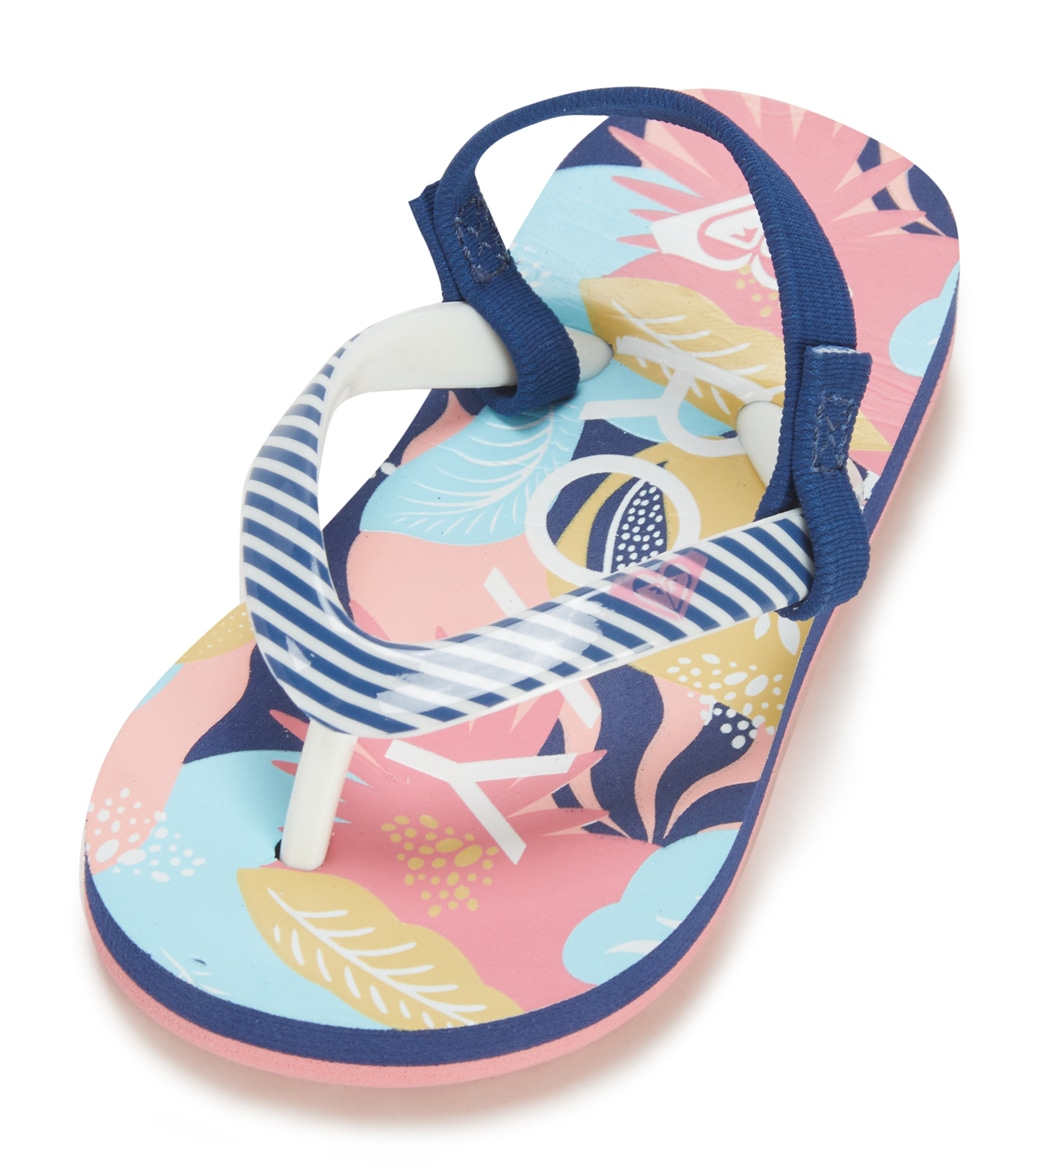 Roxy Girls' Pebbles Vi Sandals - Dazzling Blue/Hot Coral 10 - Swimoutlet.com